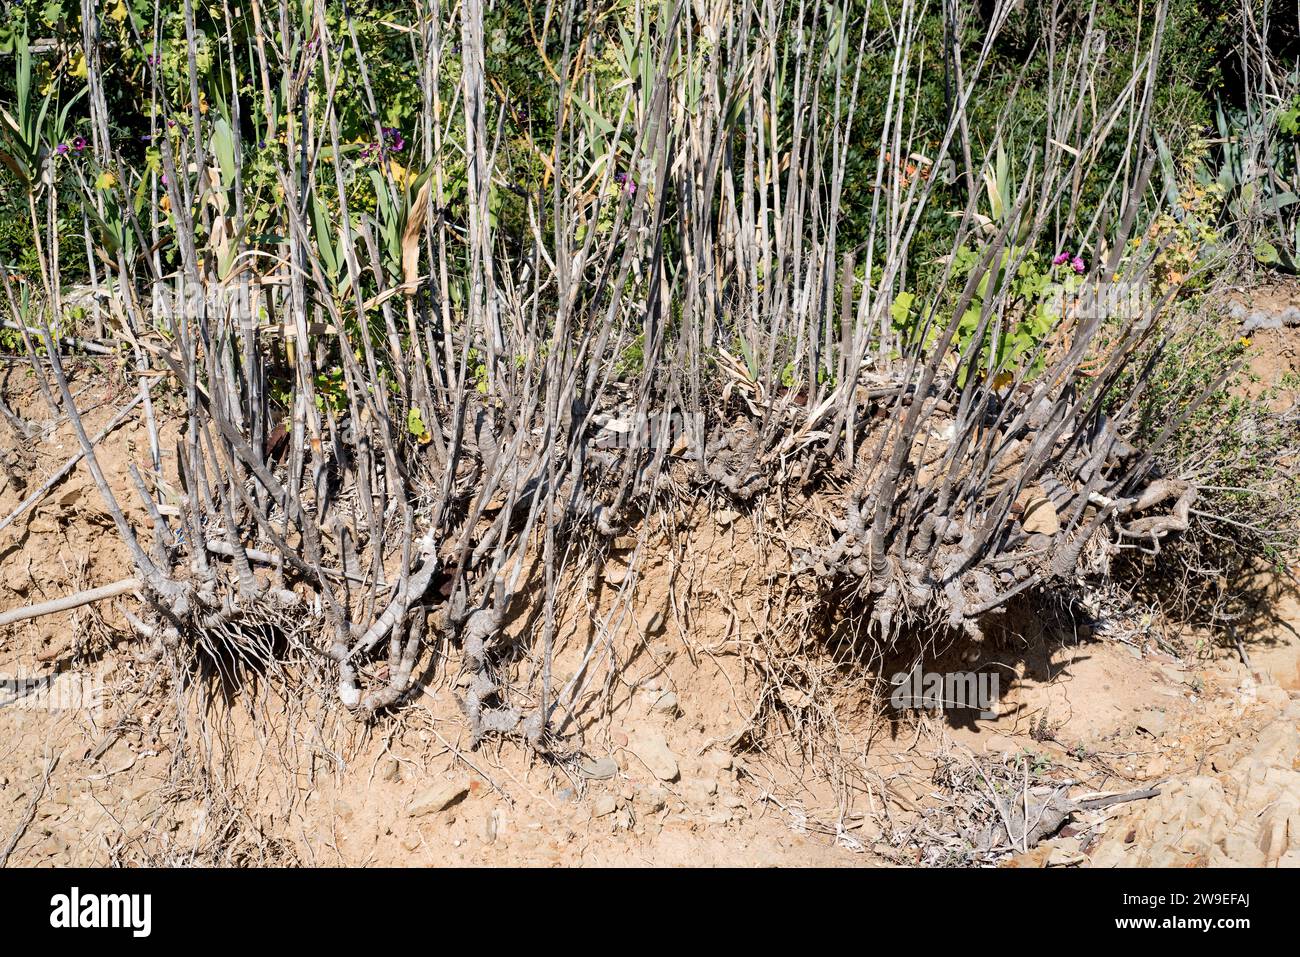 Giant cane, giant reed or wild cane (Arundo donax) is a perennial grass native to Mediterranean Basin. Rhizomes detail. This photo was taken in Cap Ra Stock Photo